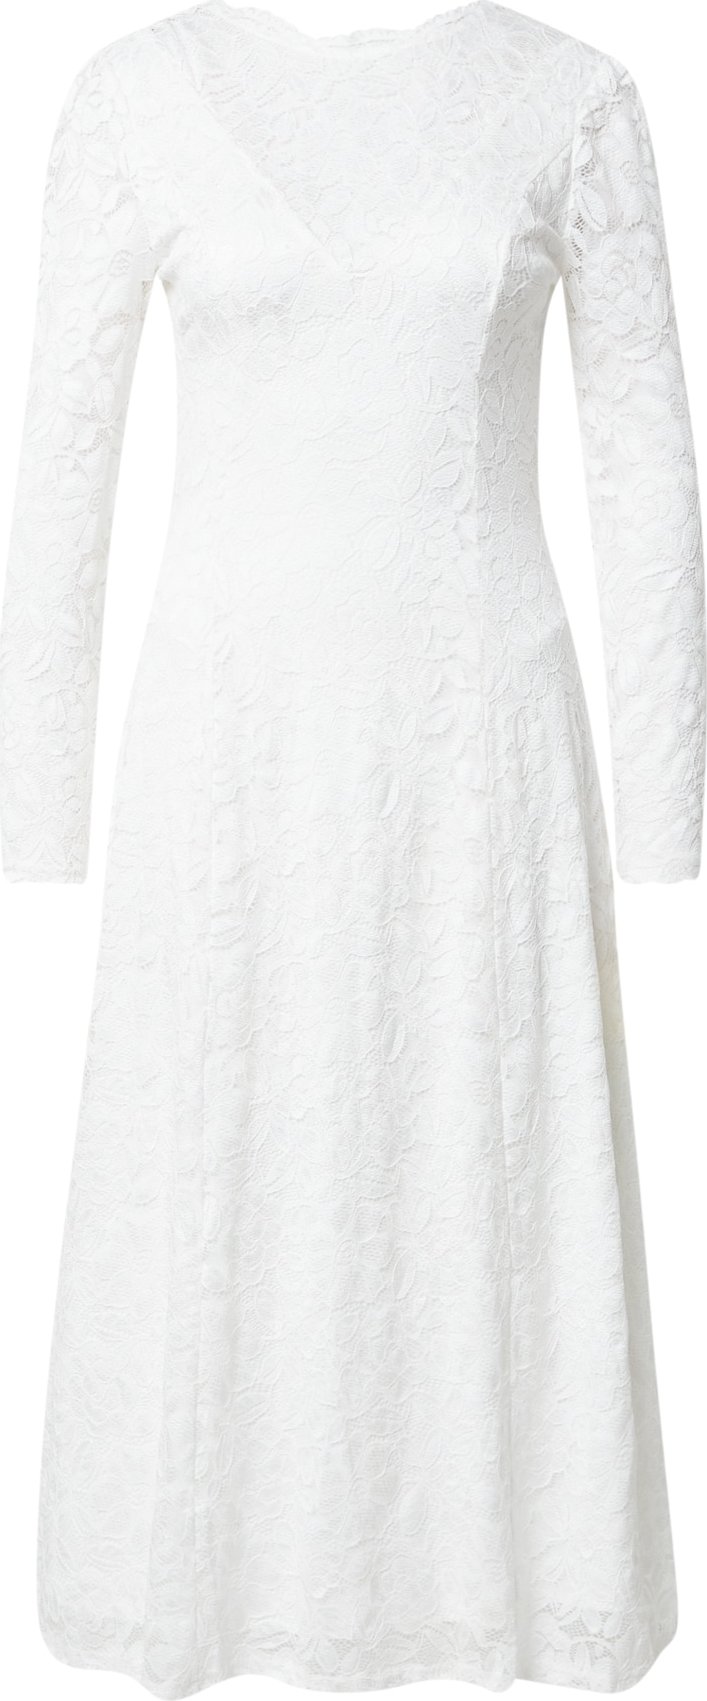 Skirt & Stiletto Společenské šaty 'Evalina' bílá